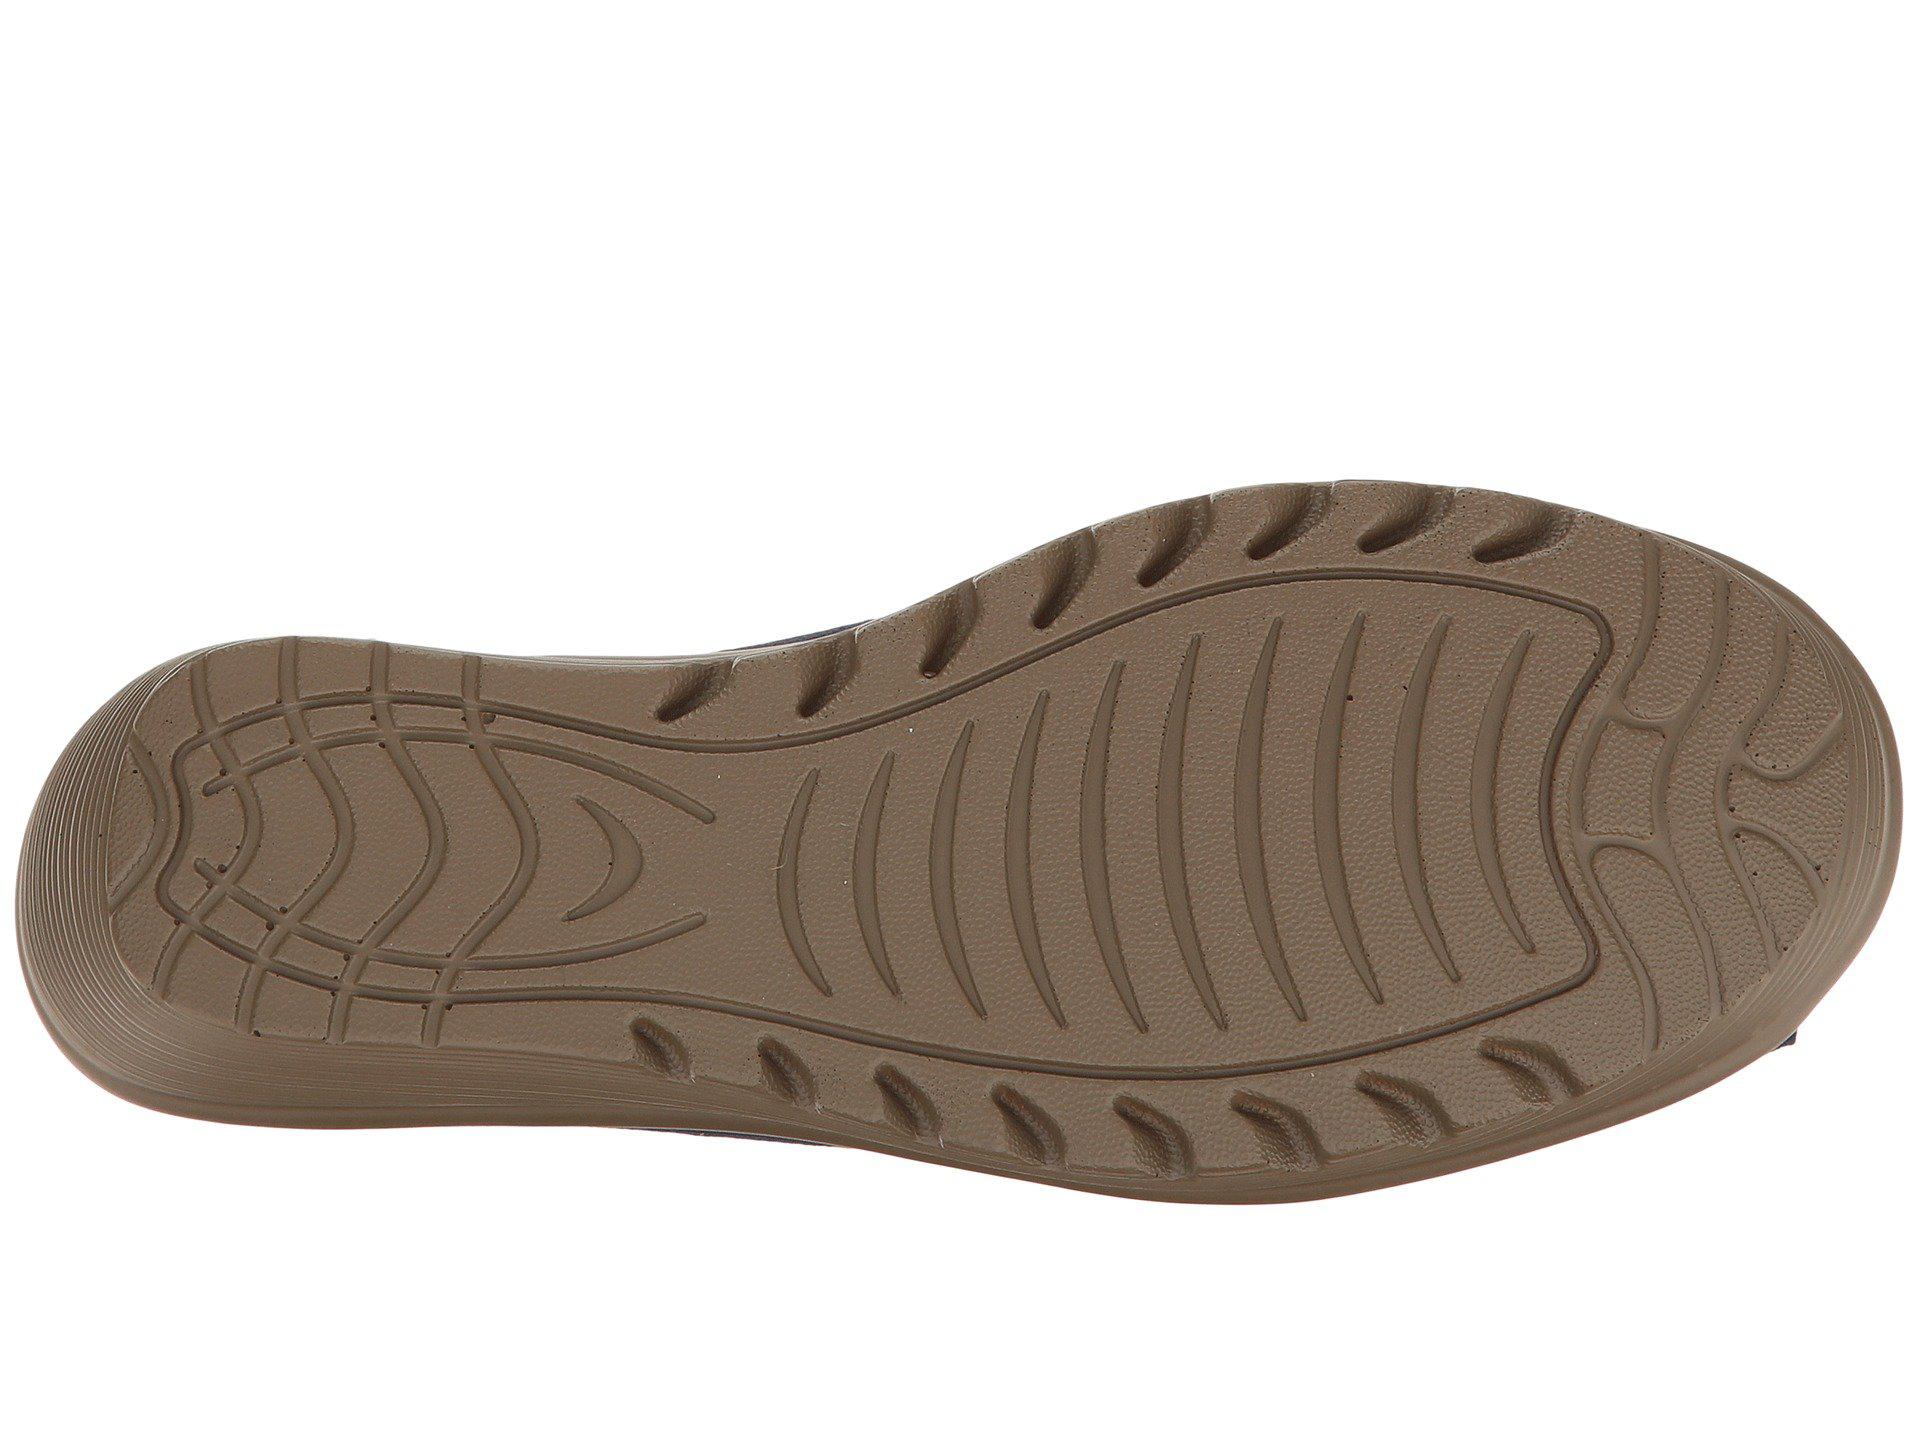 Skechers Parallel - Trapezoid Wedge Sandal in Blue | Lyst